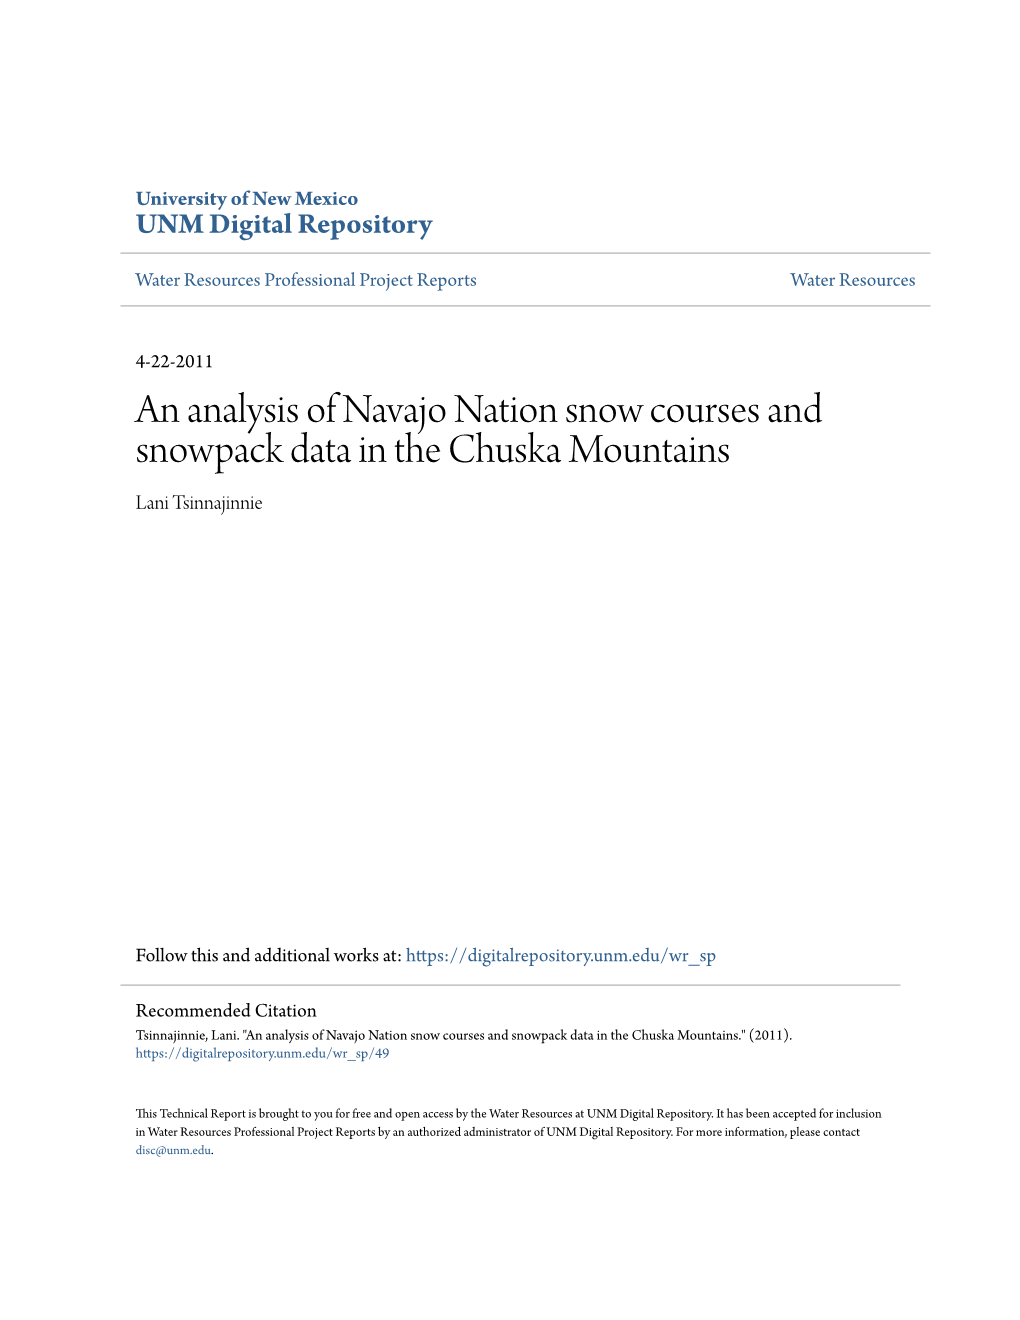 An Analysis of Navajo Nation Snow Courses and Snowpack Data in the Chuska Mountains Lani Tsinnajinnie